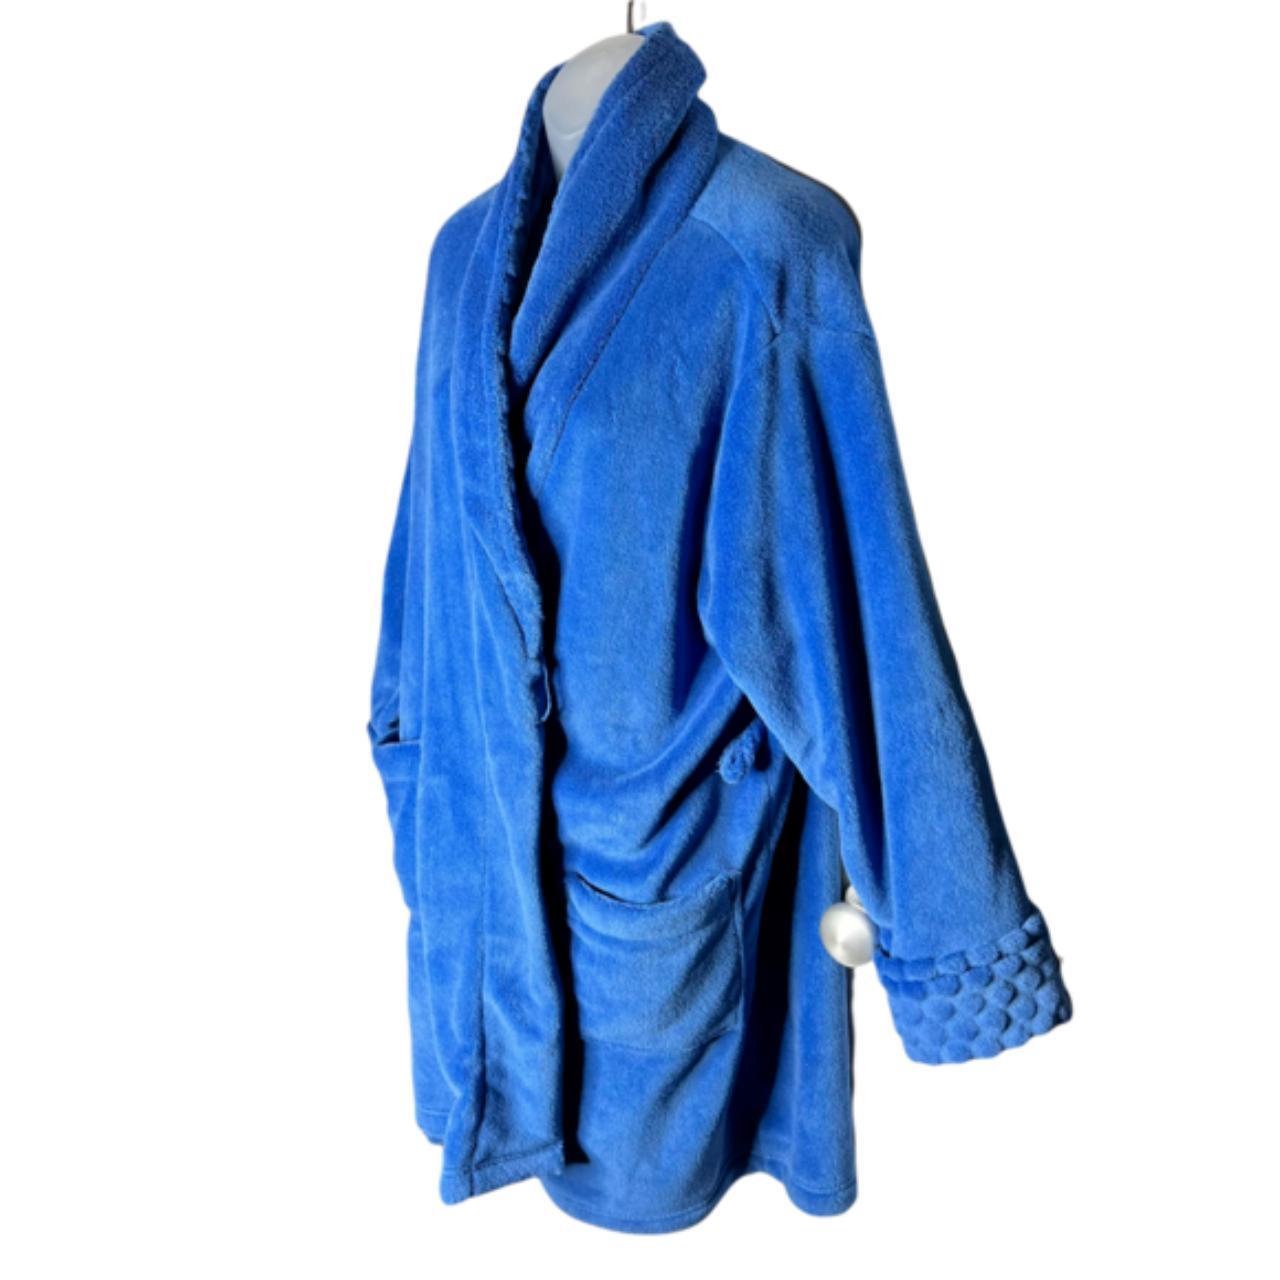 Croft & Barrow Robe Super soft 100% polyester... - Depop